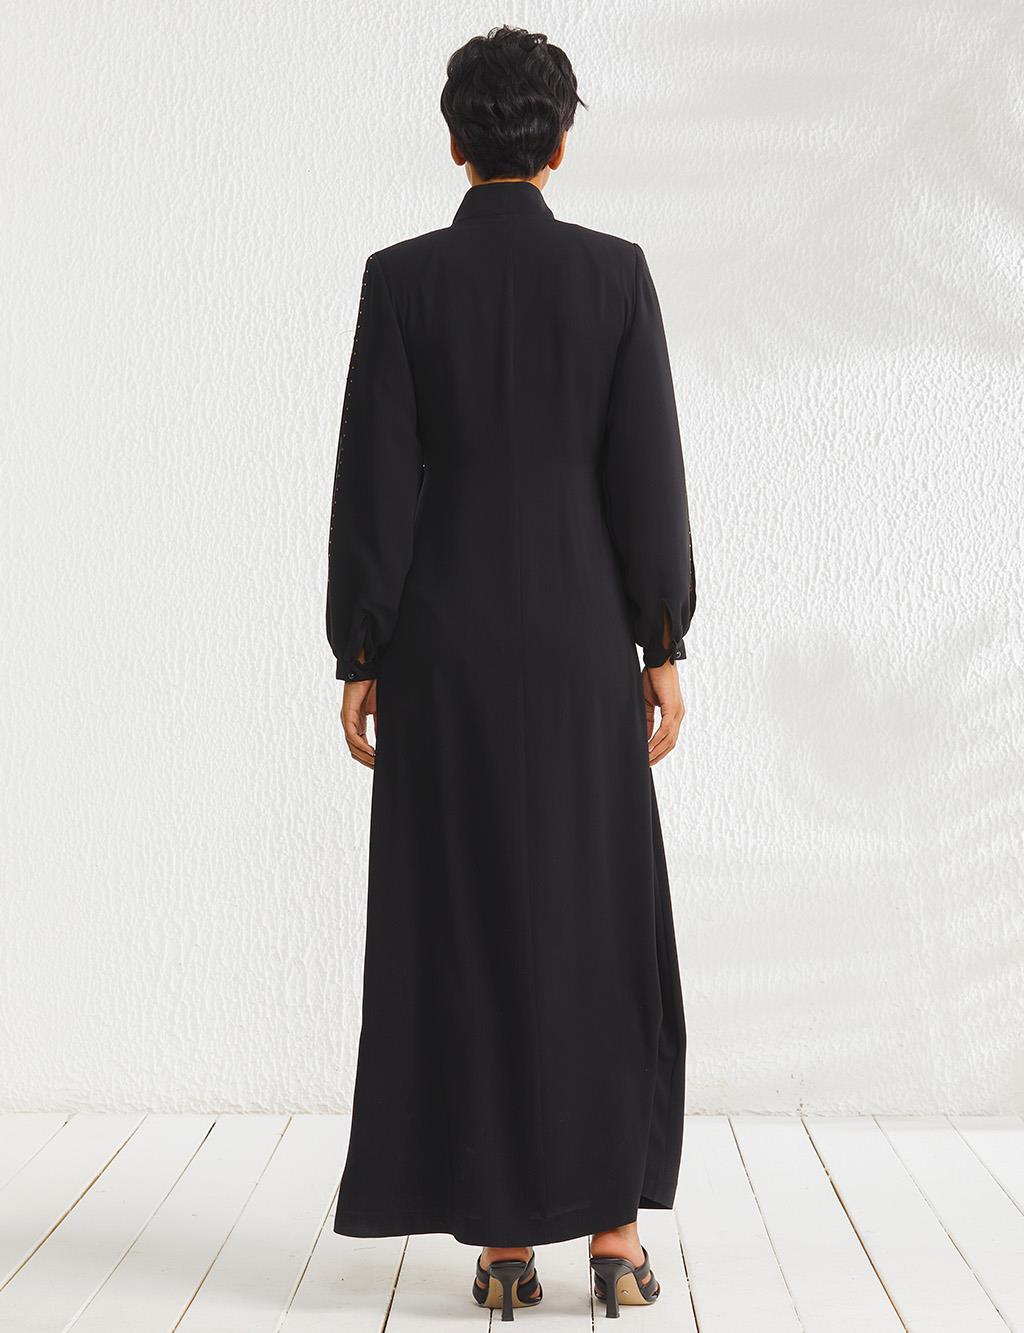 Sleeve Detailed Long Wear & Go Black